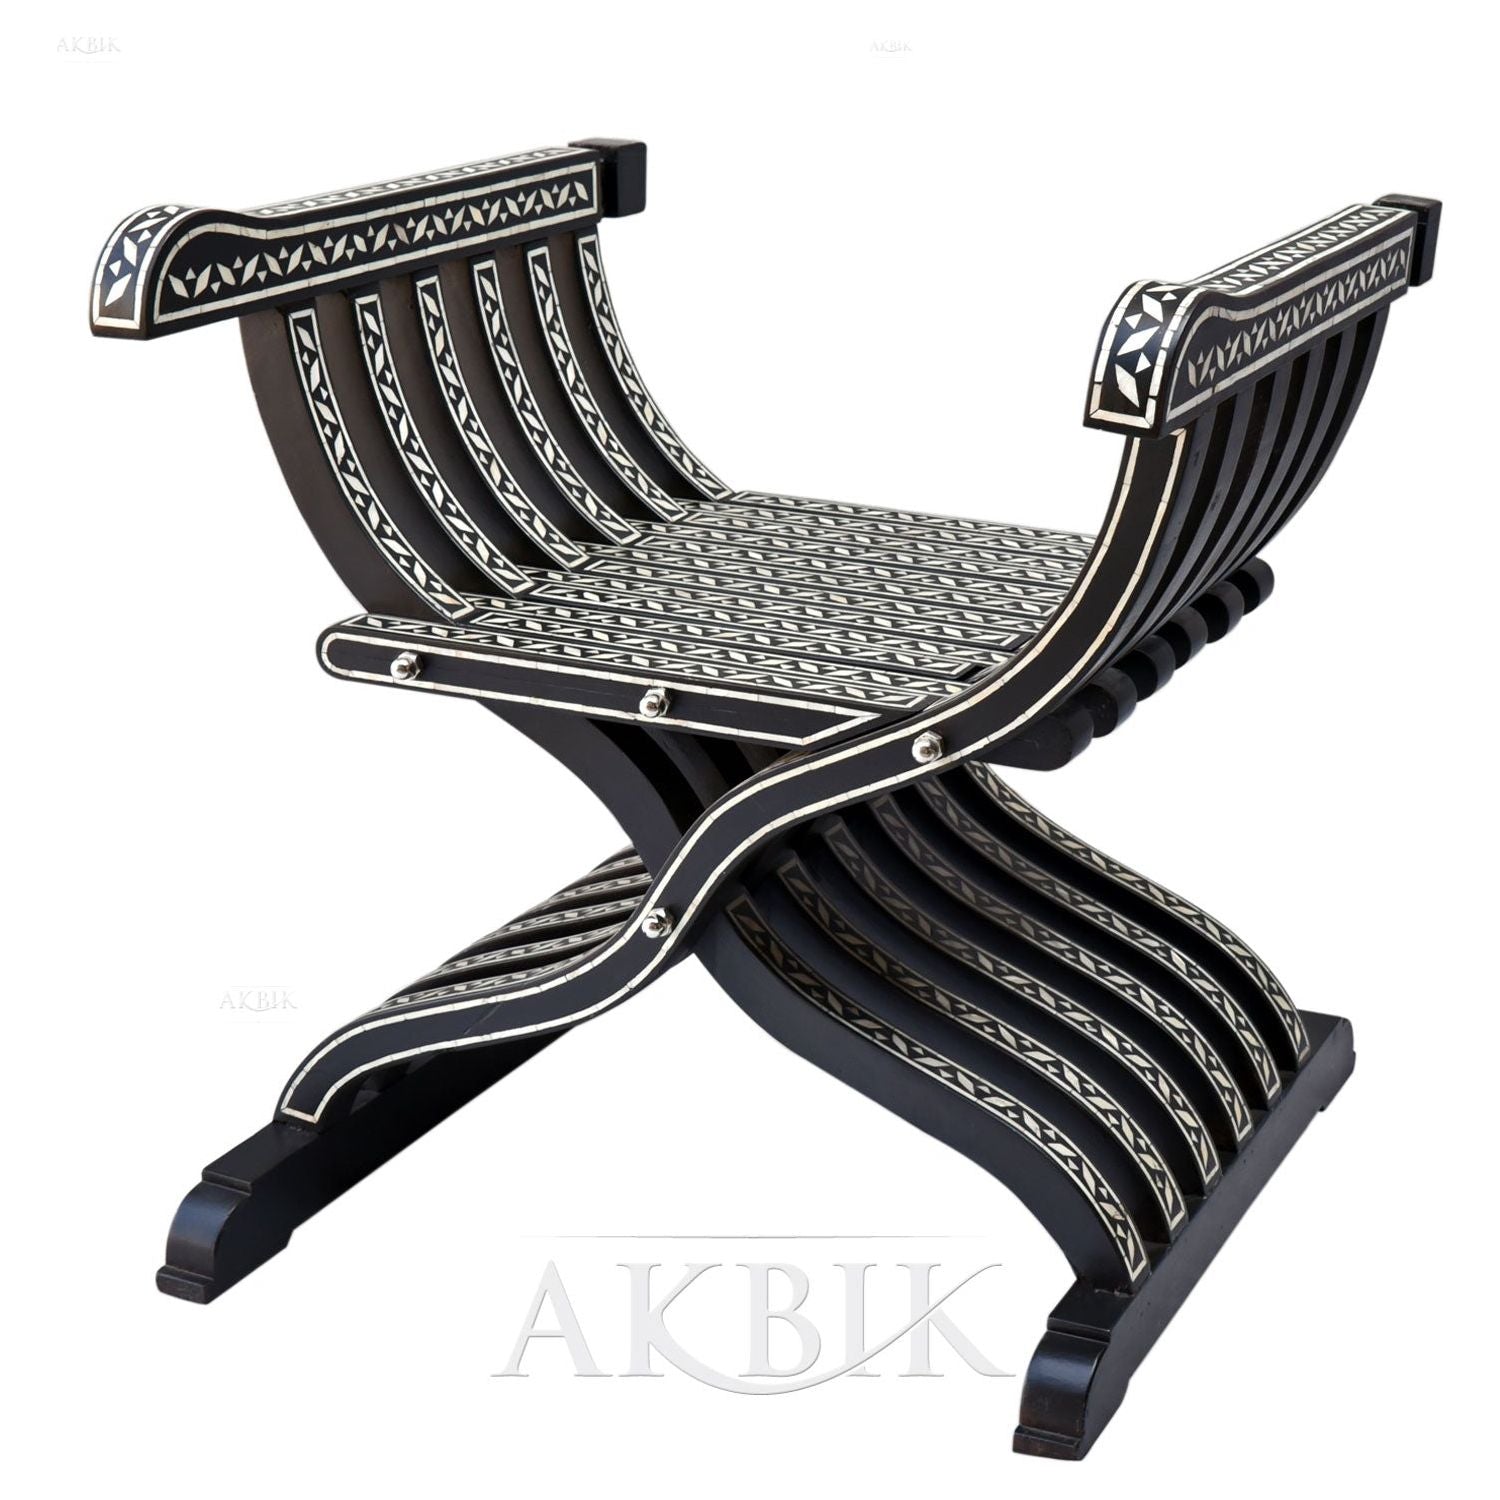 Italian Renaissance Style Chair With Levantine Essence - AKBIK Furniture & Design